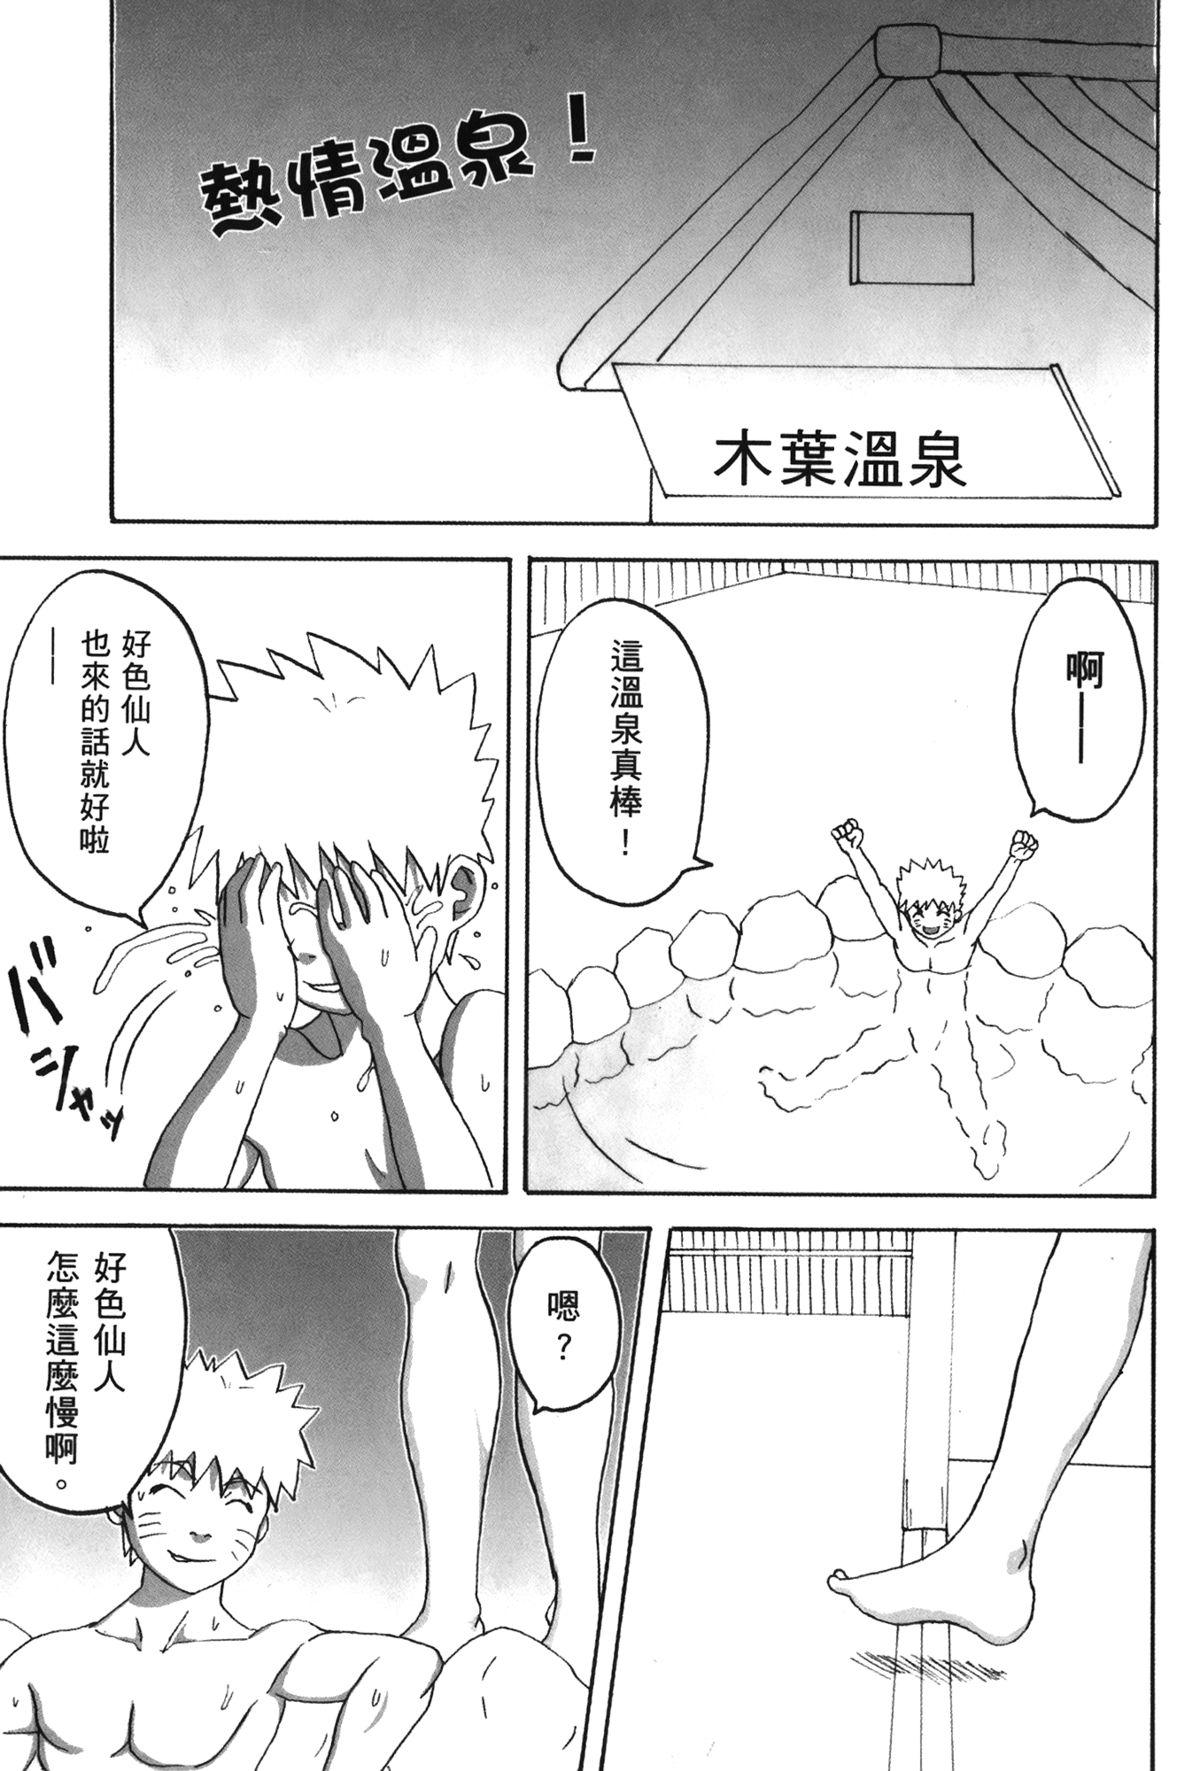 Daddy naruto ninja biography vol.09 - Naruto Shower - Page 4